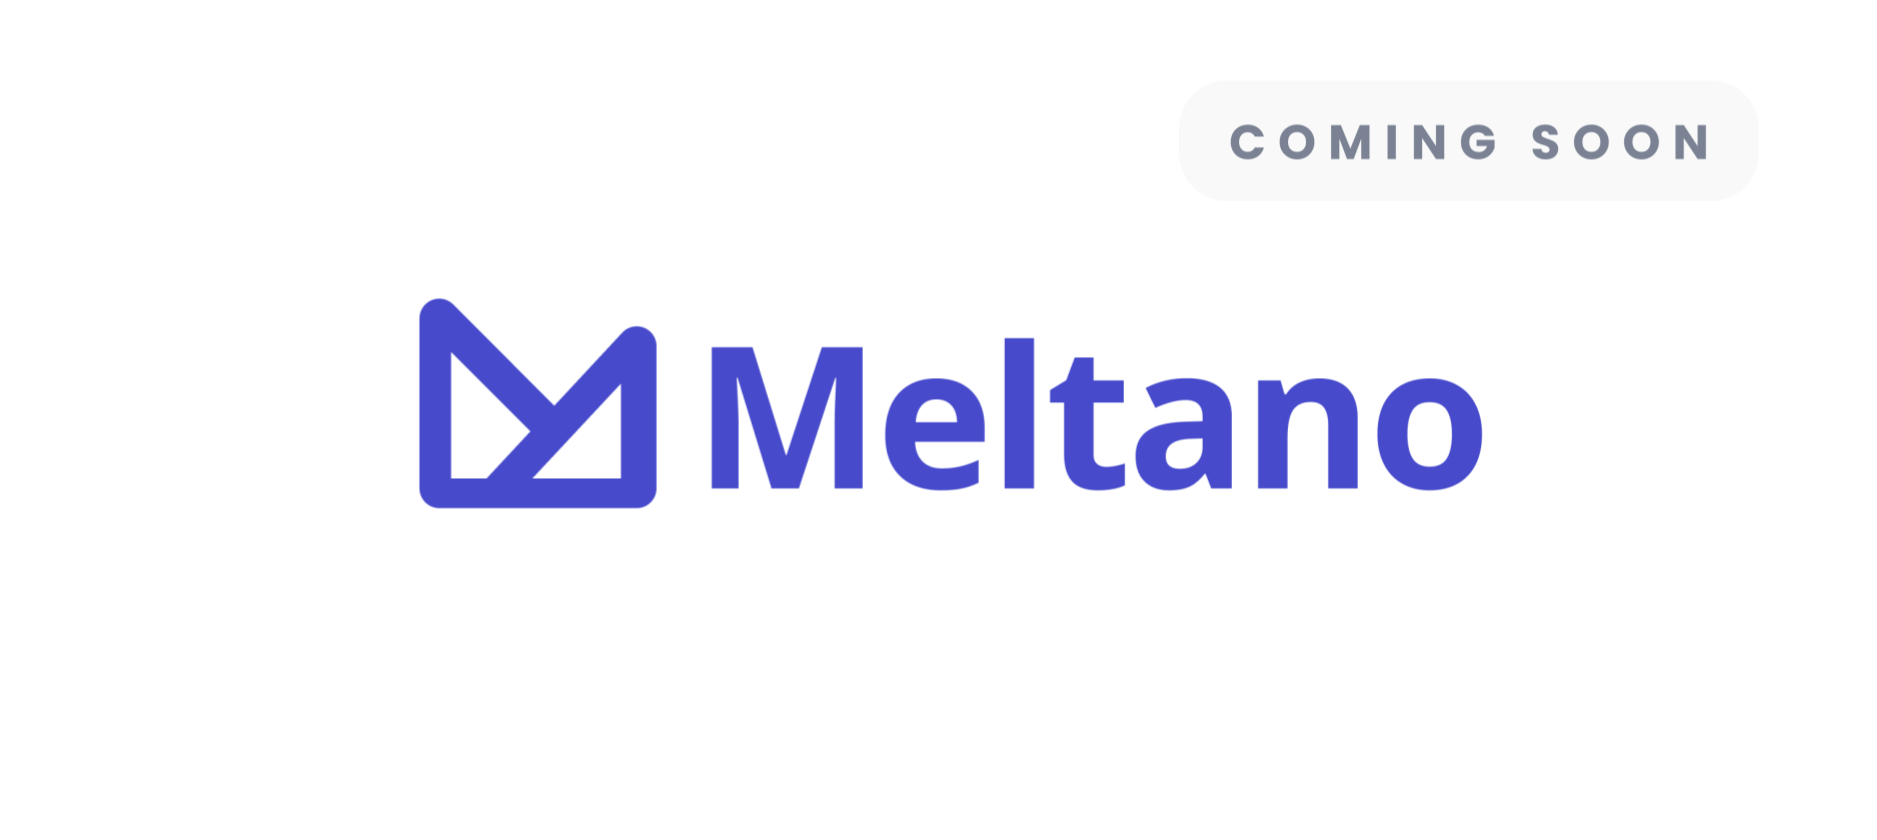 Transformation - Meltano - Coming soon